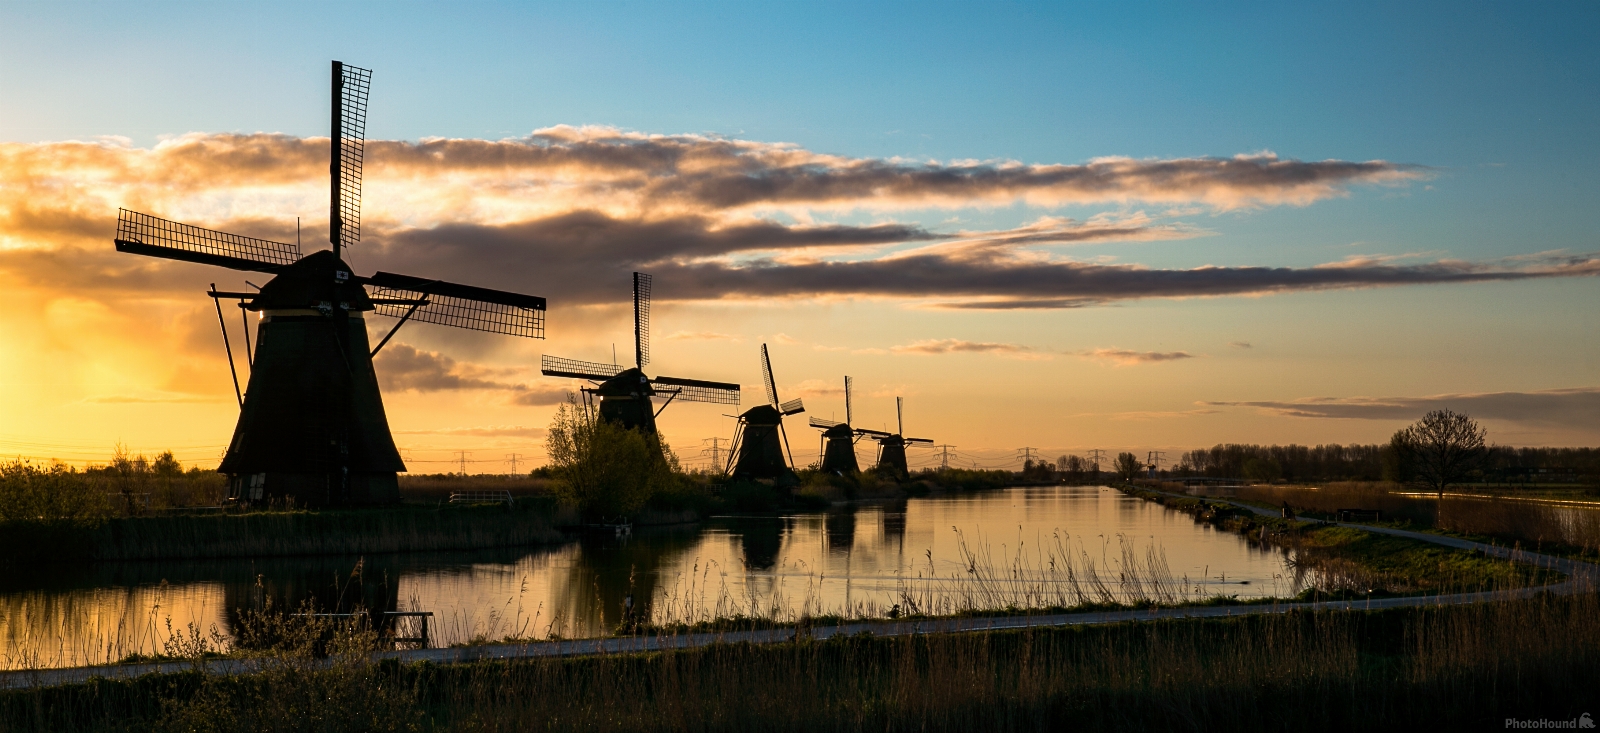 Image of Kinderdijk by Jeff Martin